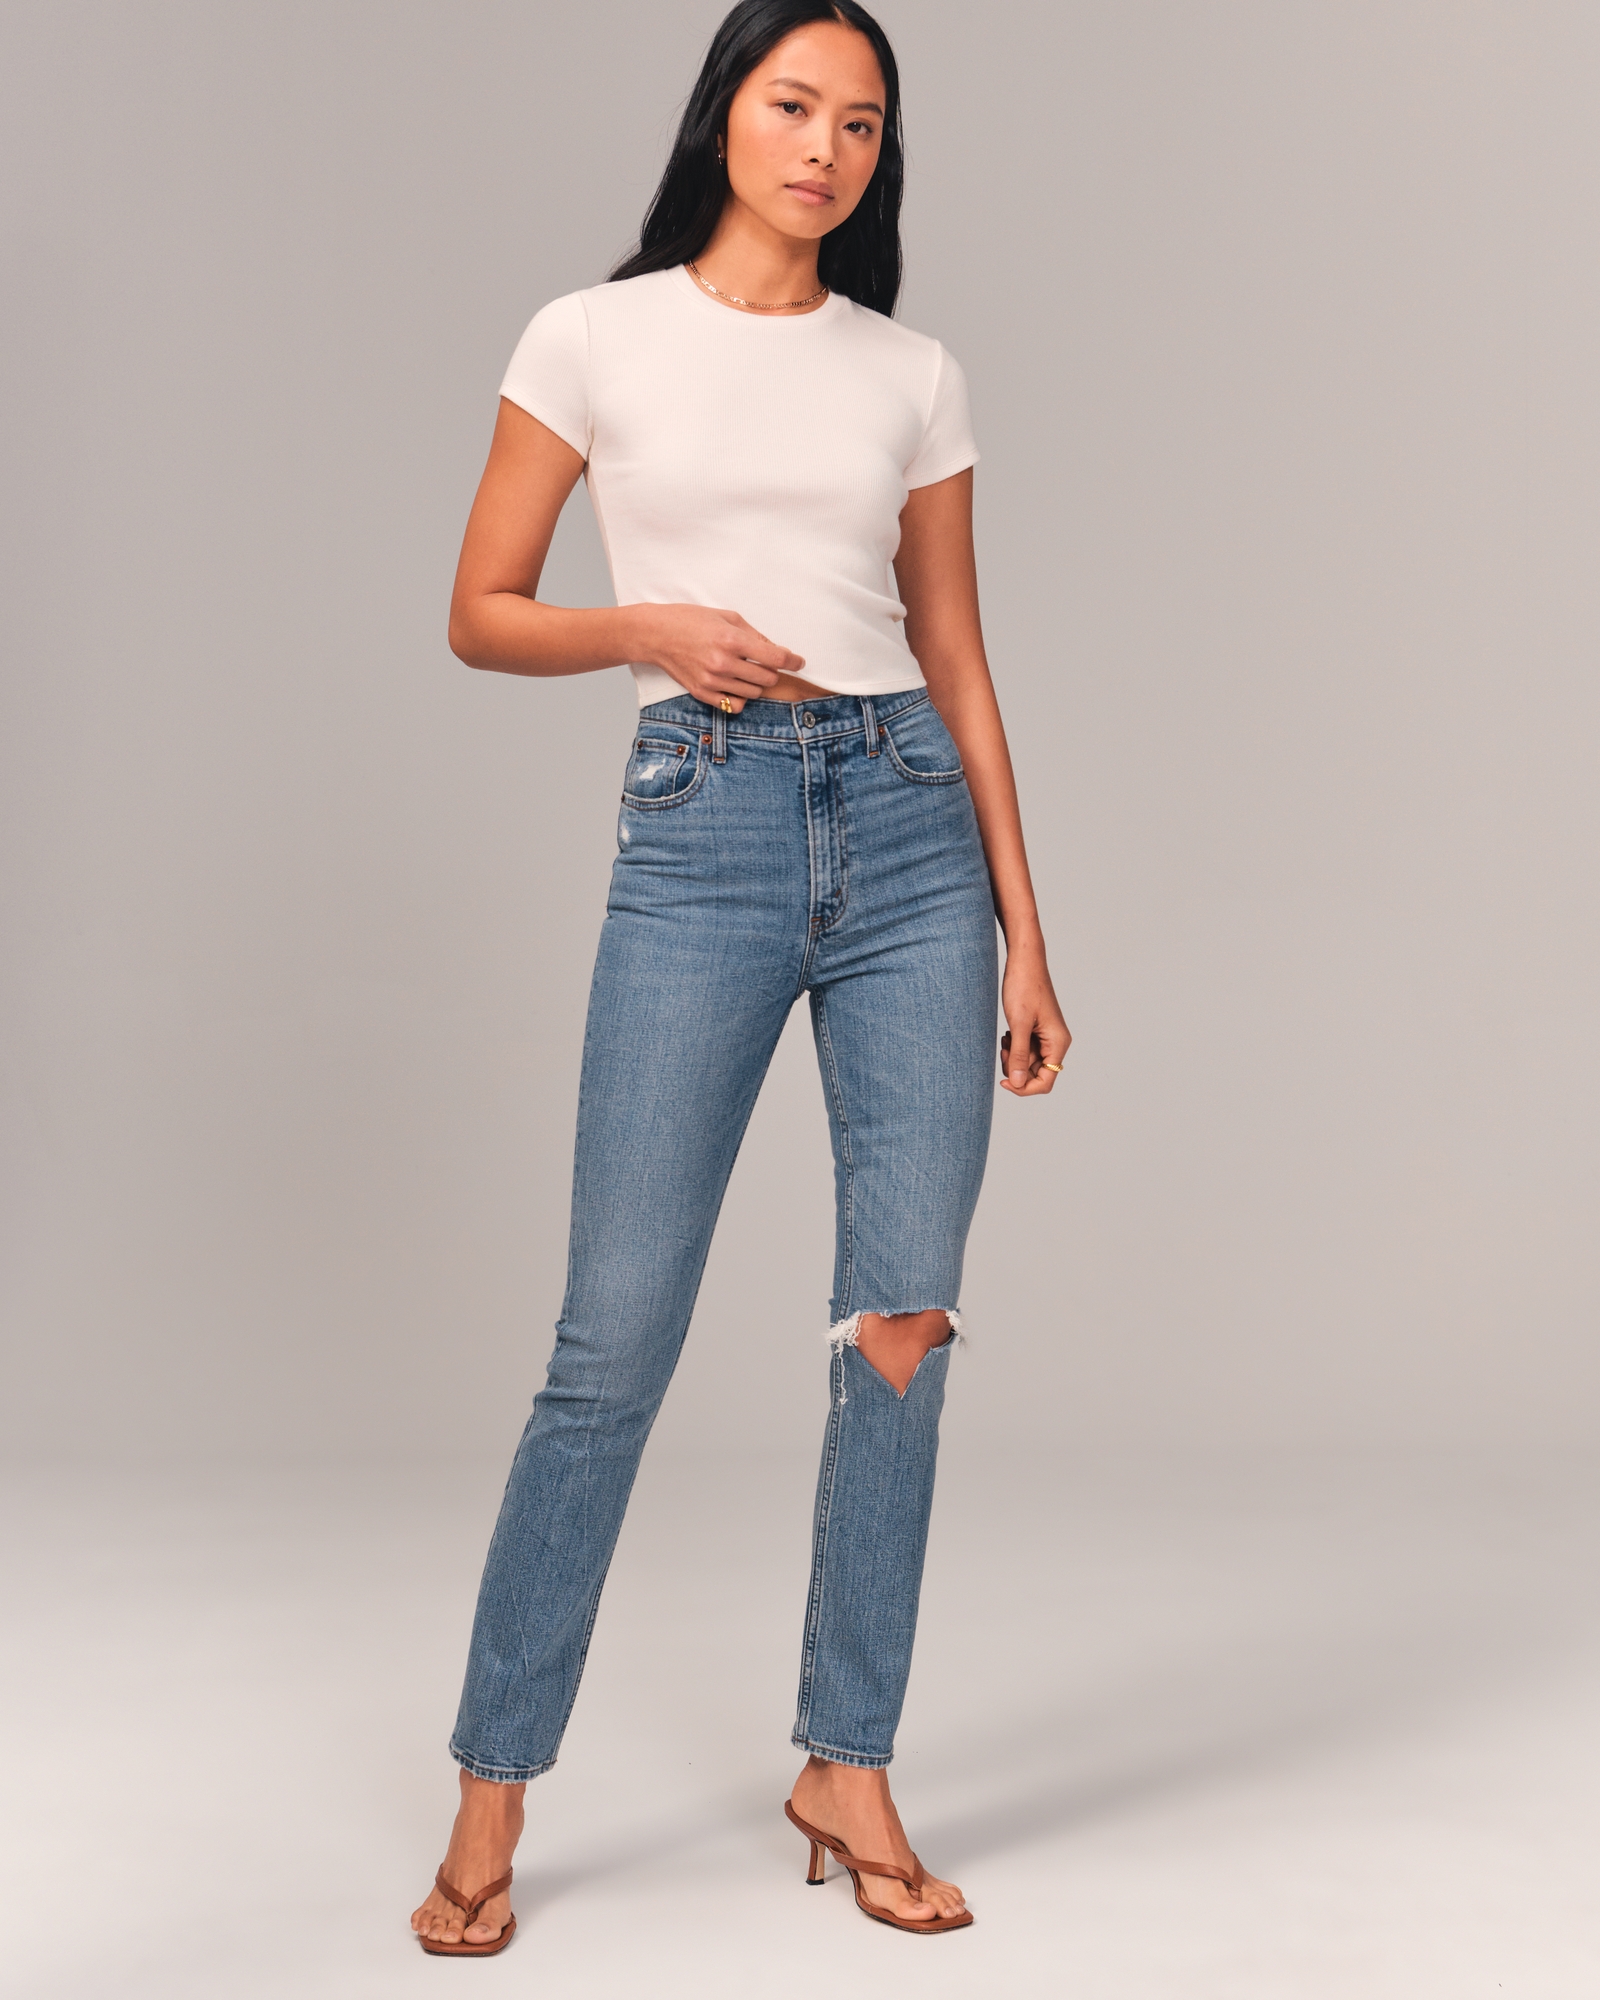 NINE WEST Women's High Rise Perfect Skinny Jean, Jules, 12 Long